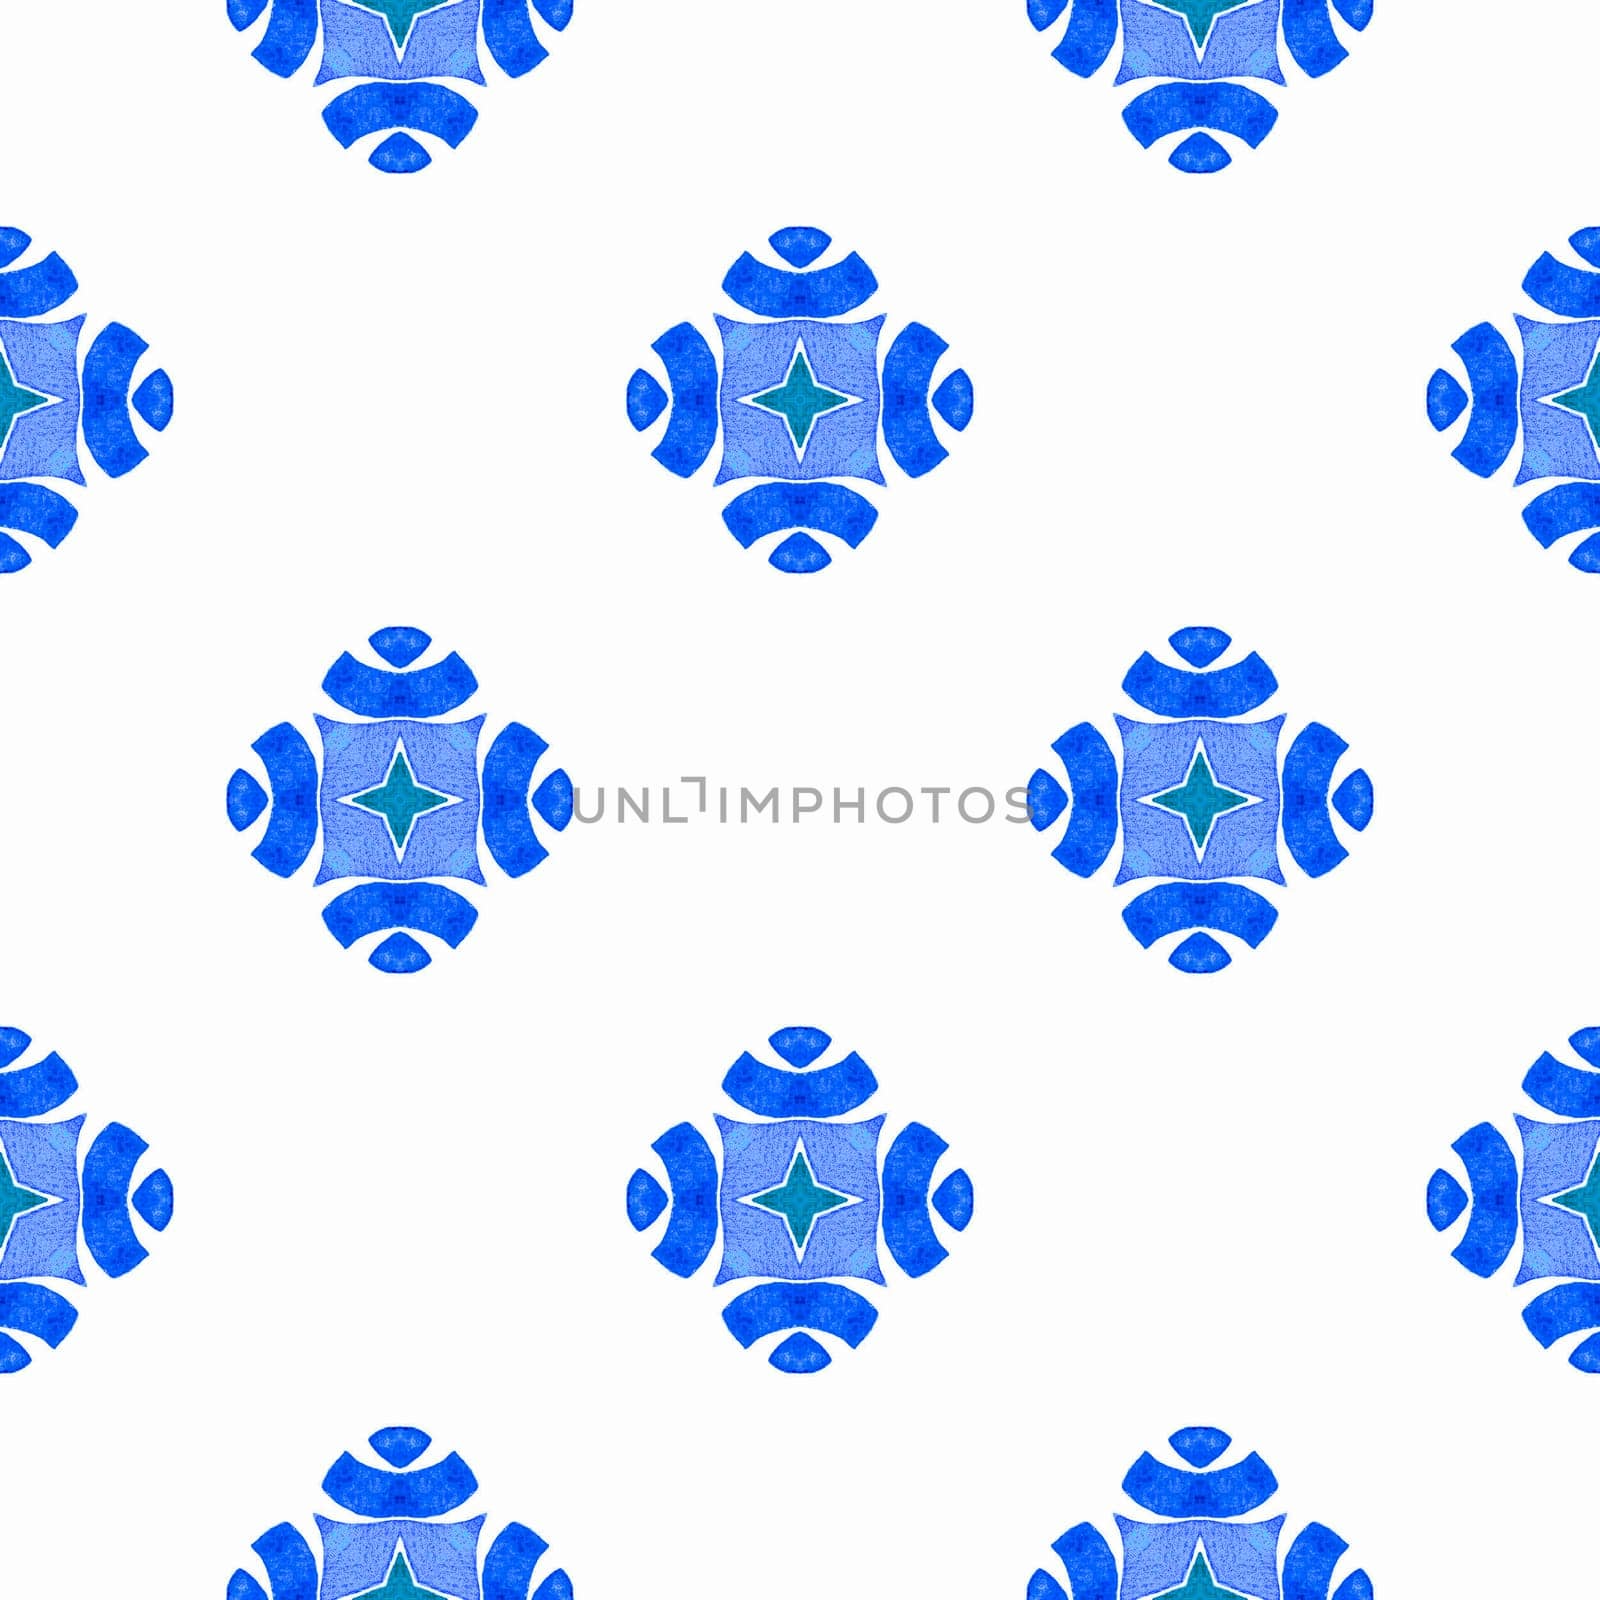 Chevron watercolor pattern. Blue nice boho chic summer design. Green geometric chevron watercolor border. Textile ready admirable print, swimwear fabric, wallpaper, wrapping.